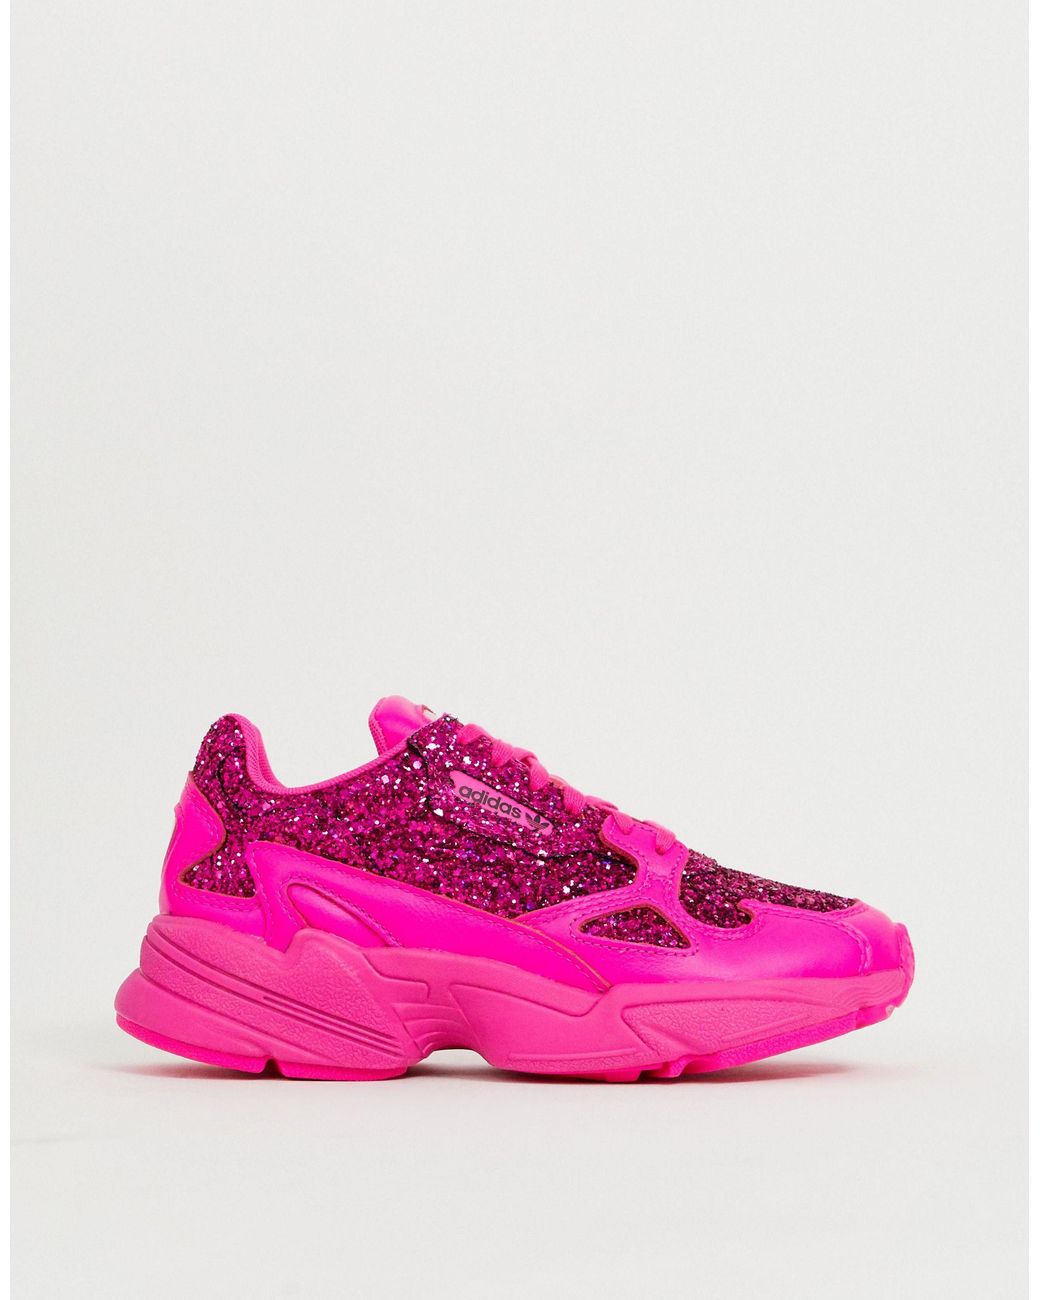 adidas Originals Premium Pink Glitter Falcon Sneakers | Lyst